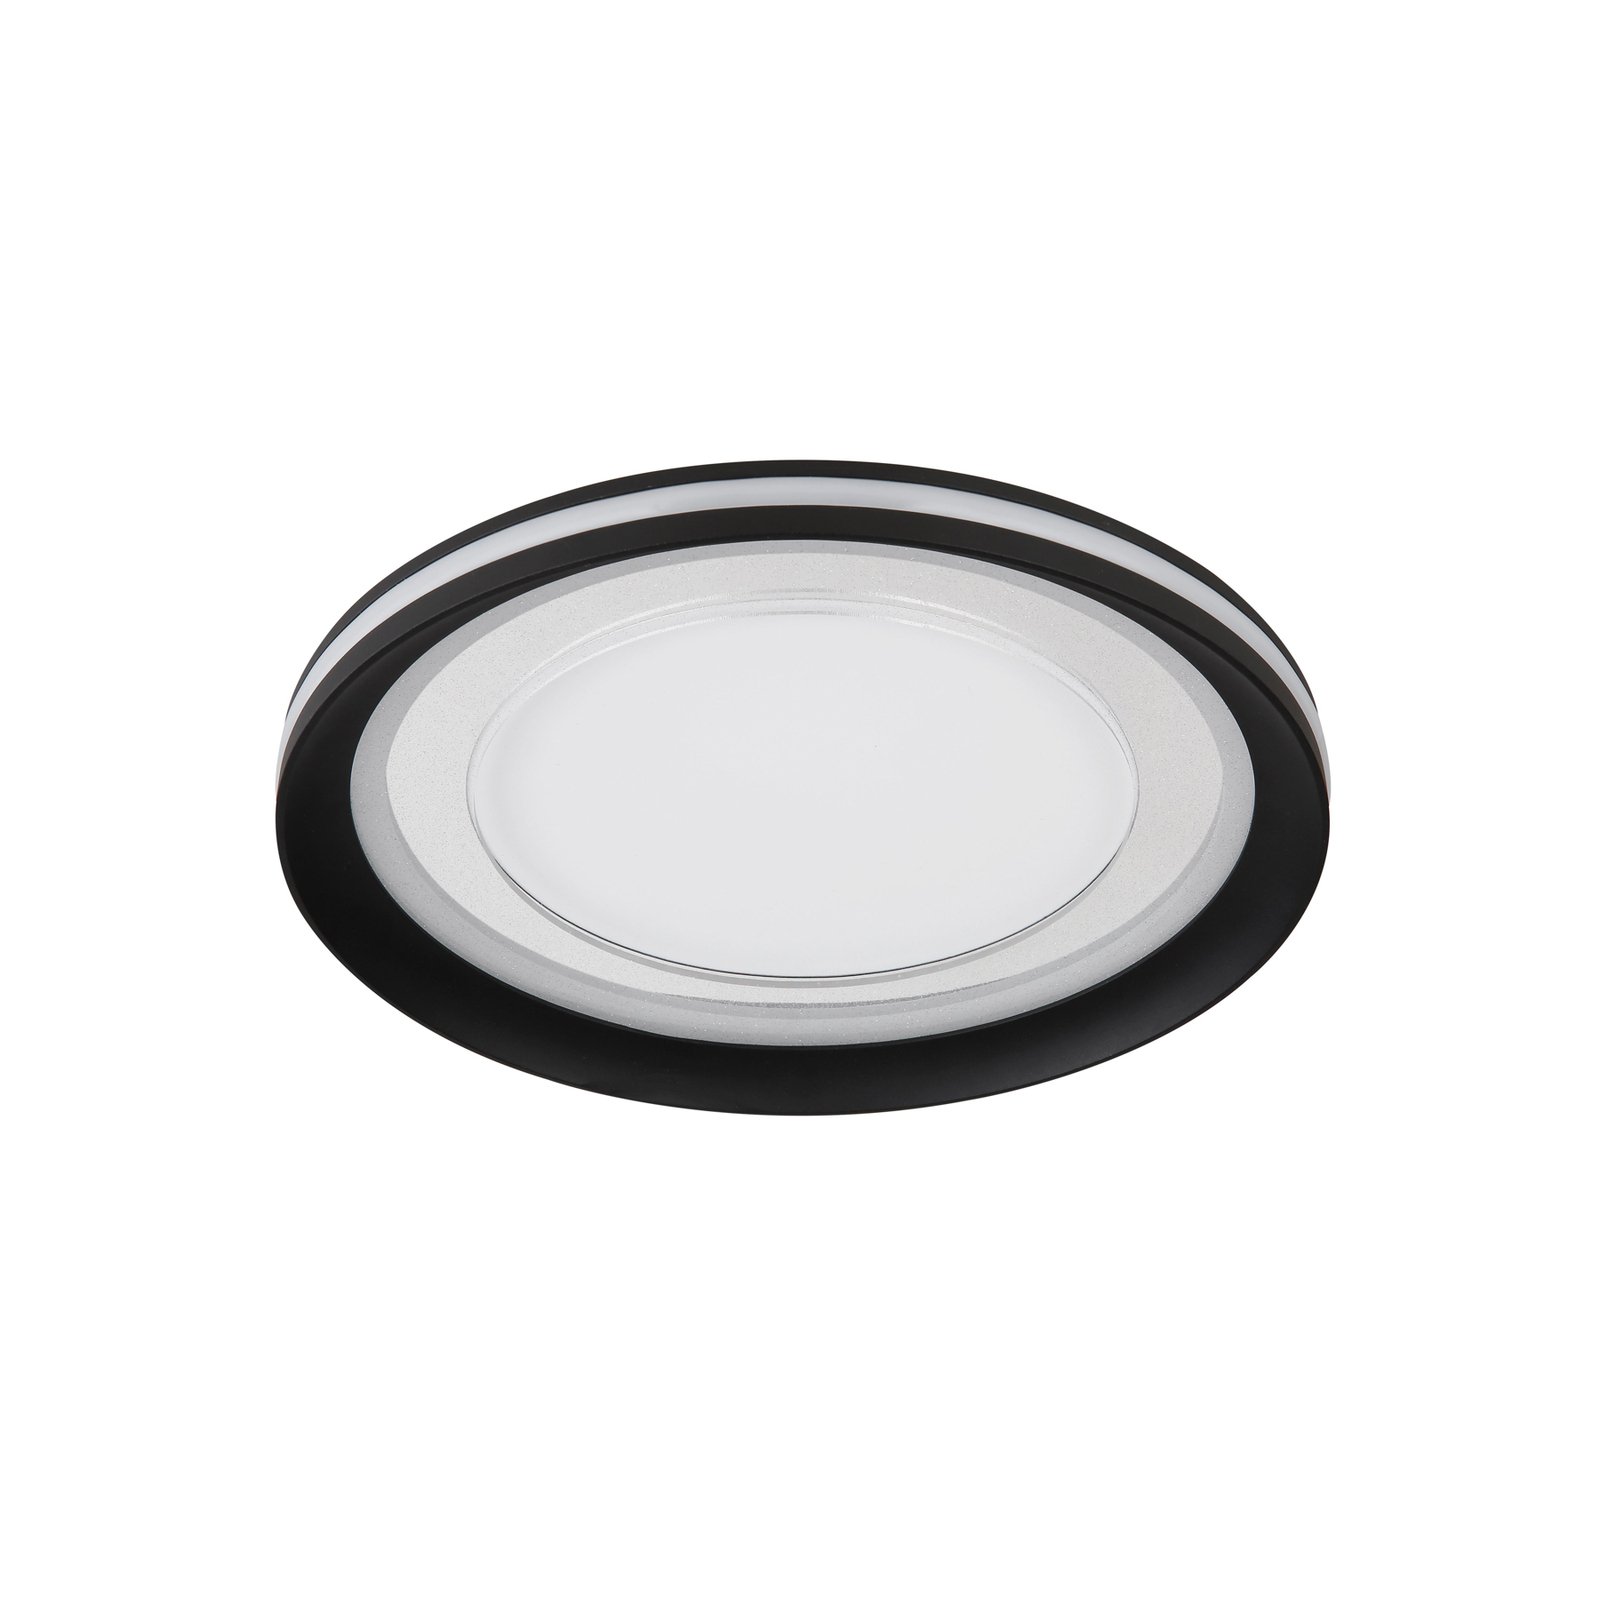 Clarino Plafón LED, Ø 36 cm, negro/blanco, acrílico